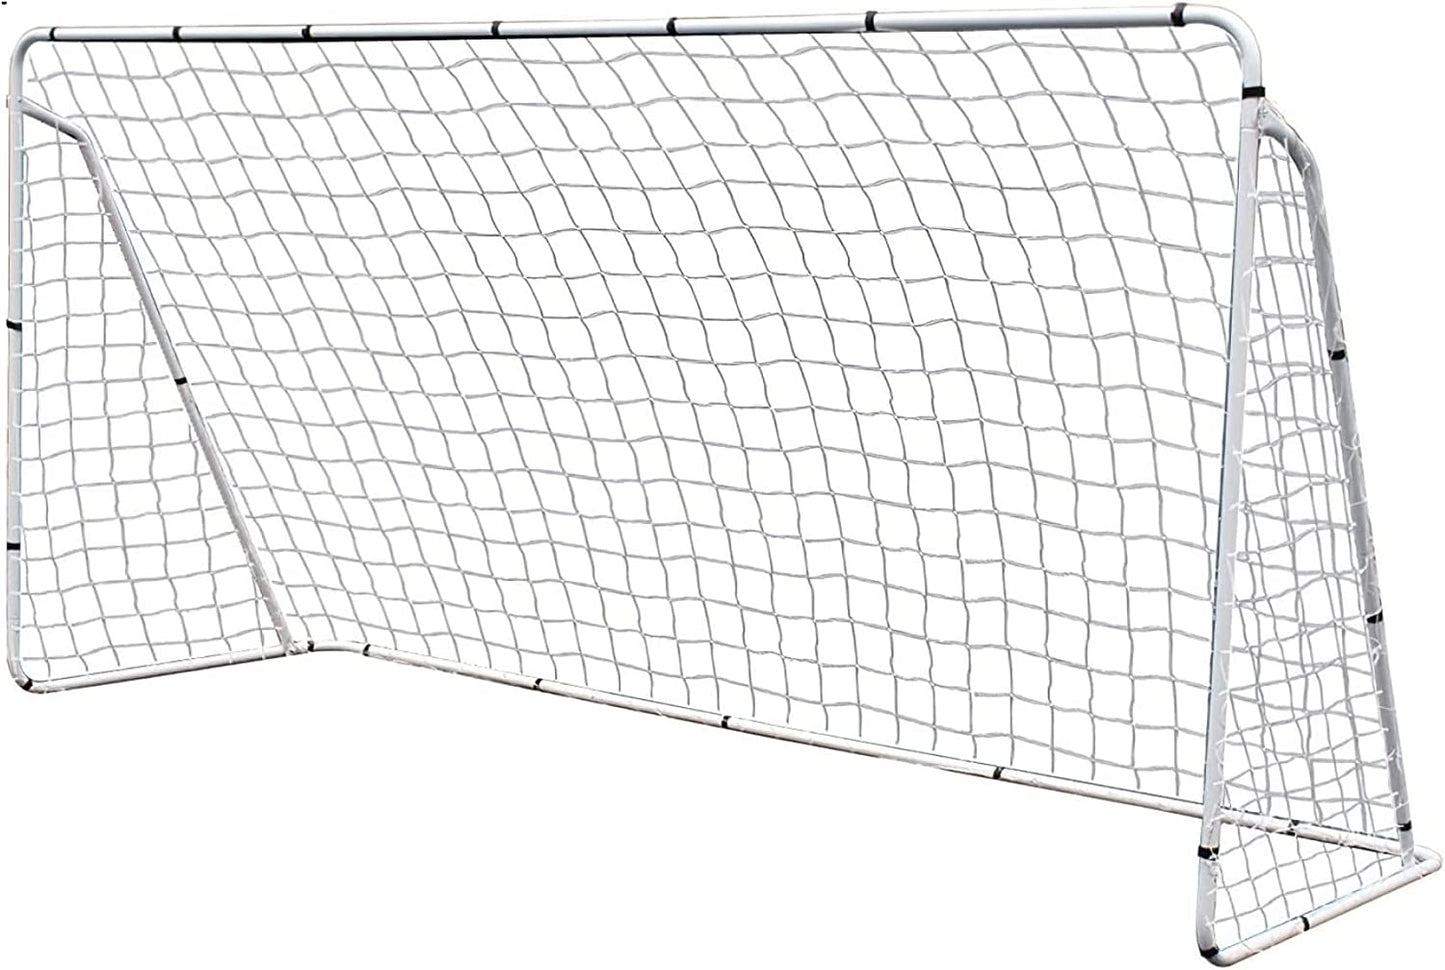 Portable Soccer Goal for Backyard Kids Adults Soccer Net and Frame for Home Backyard Practice Training Goals Soccer Field Equipment